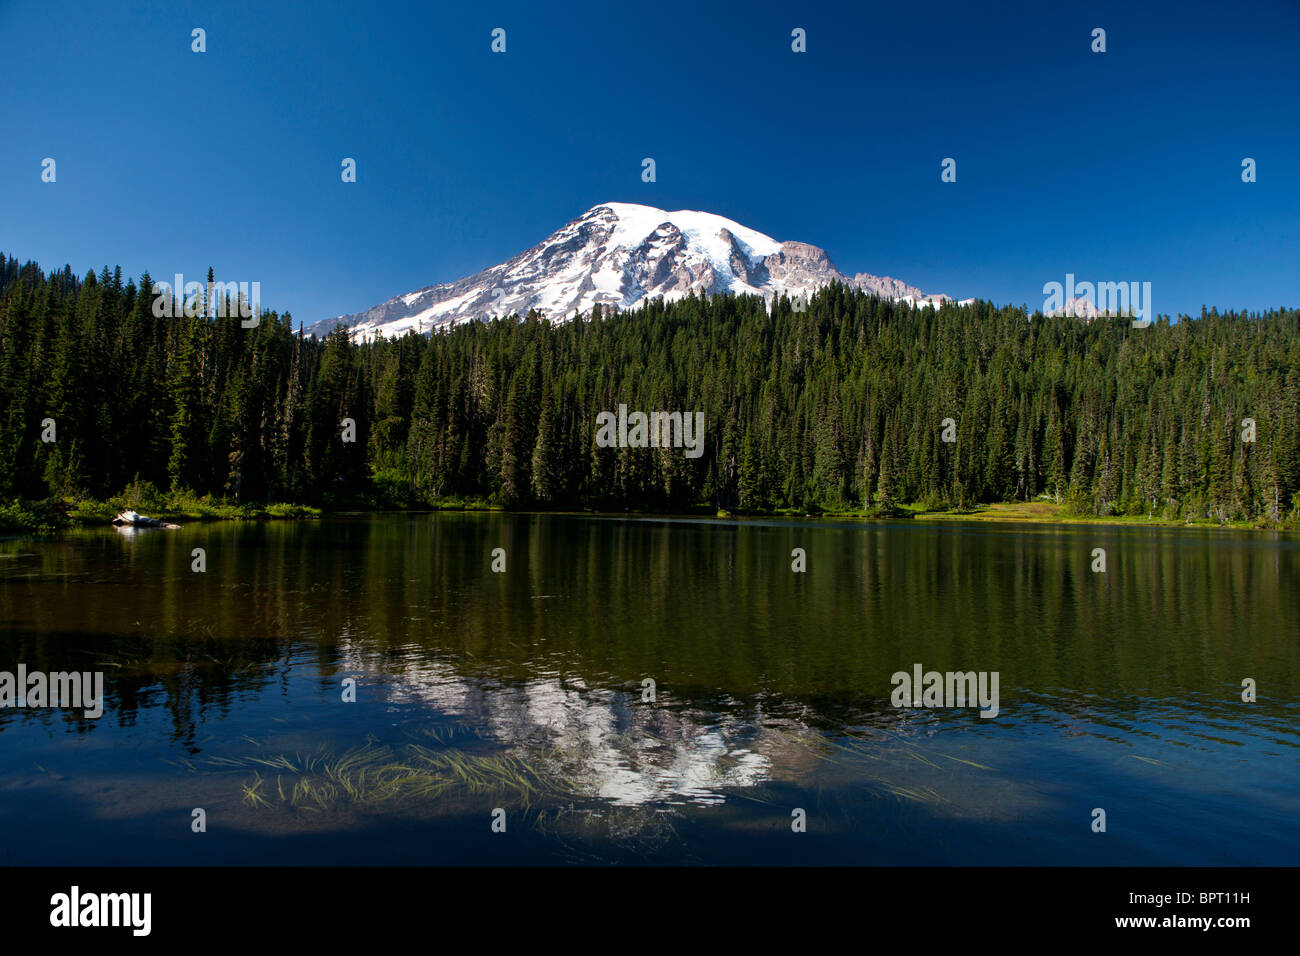 Reflection of Mount Rainier in Reflection Lake, Mt. Rainier National Park, Washington, United States of America Stock Photo